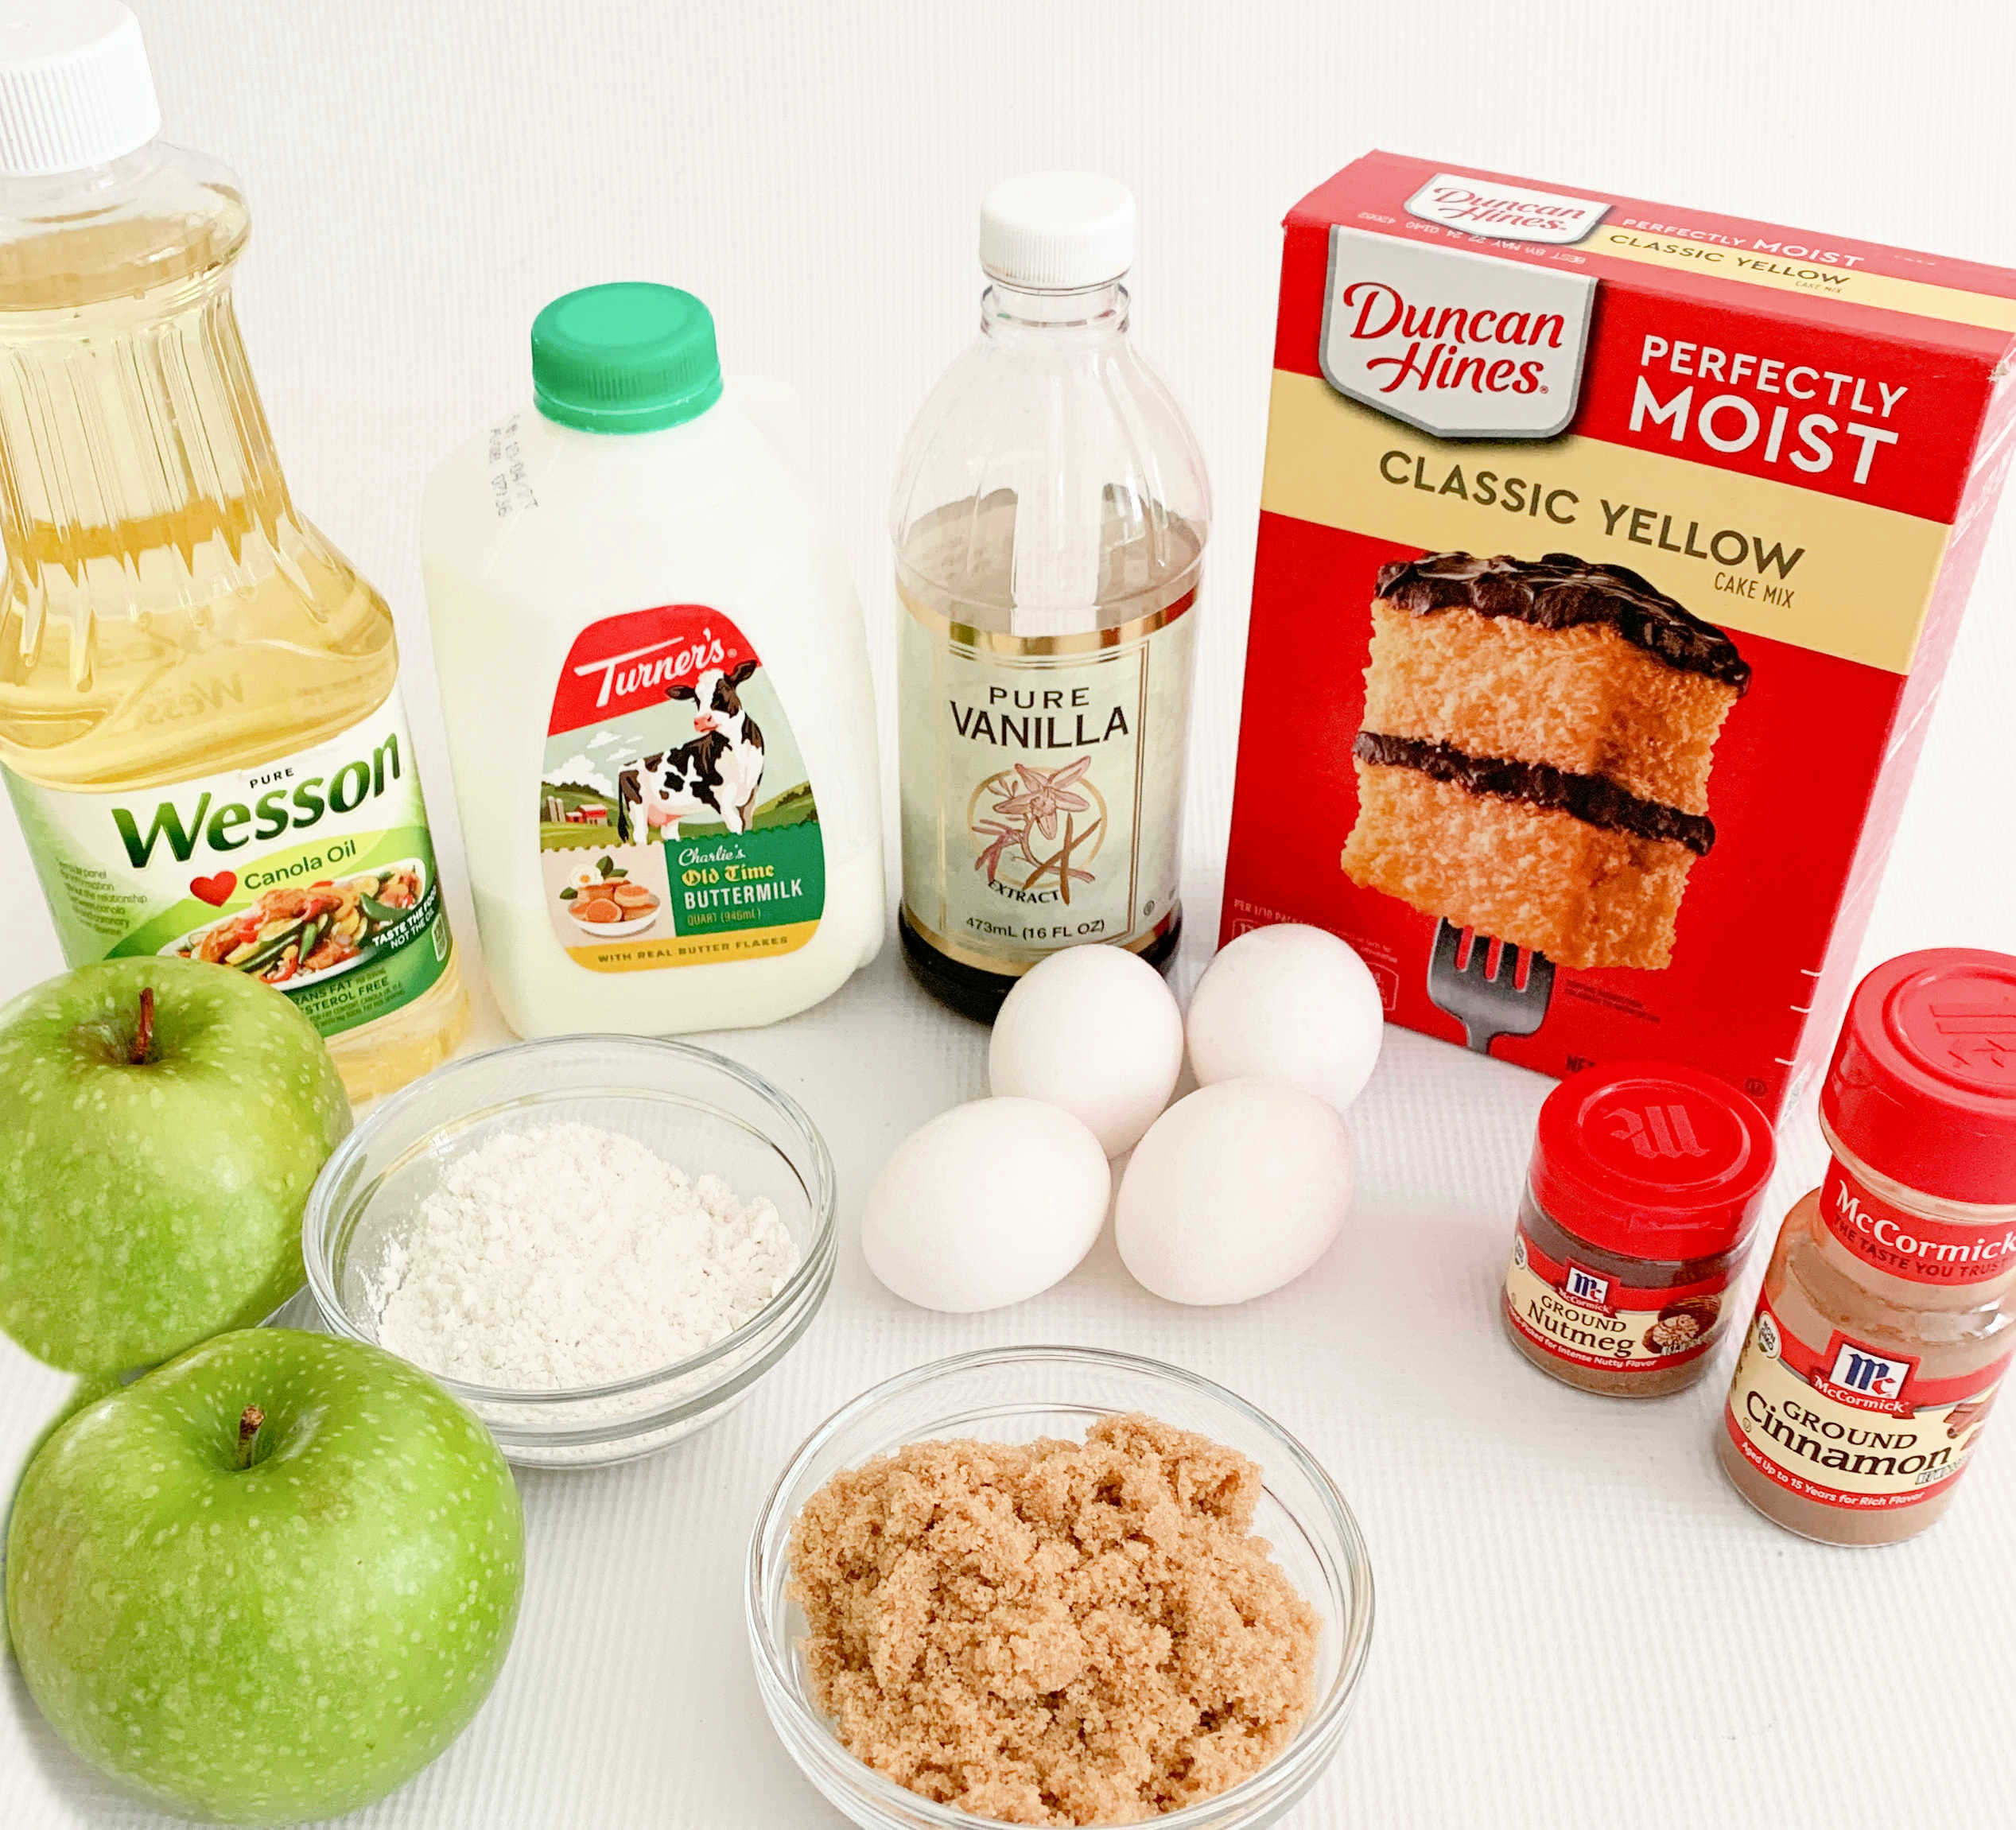 Ingredients for easy Apple Bundt Cake.